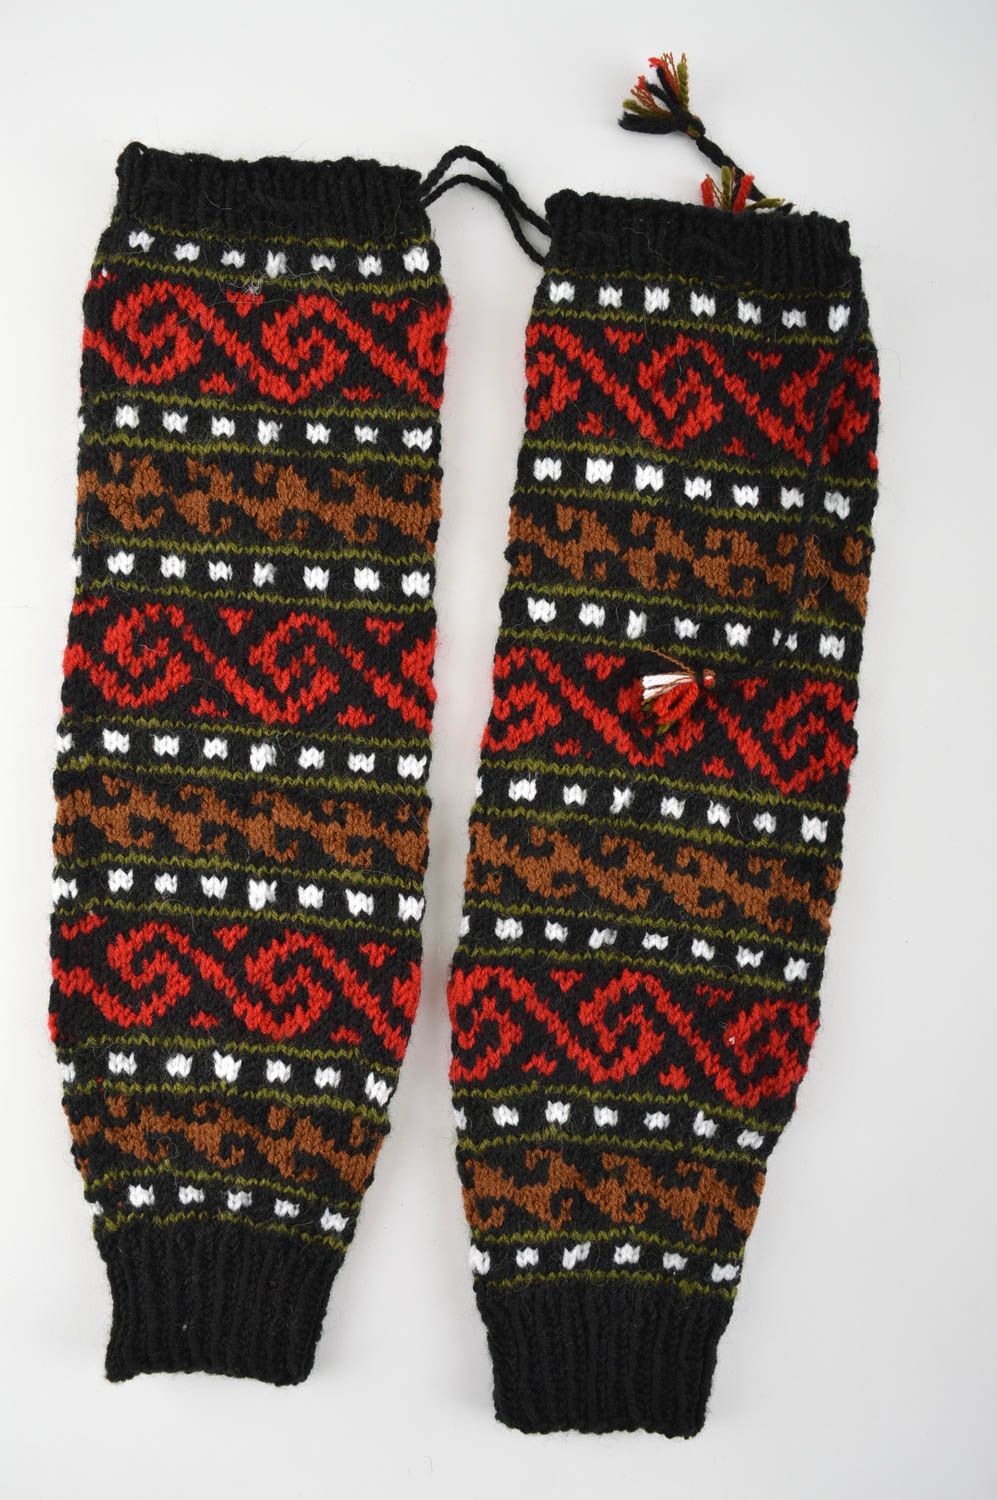 Handmade designer leg warmers knitted winter socks woolen leg warmers for women photo 2